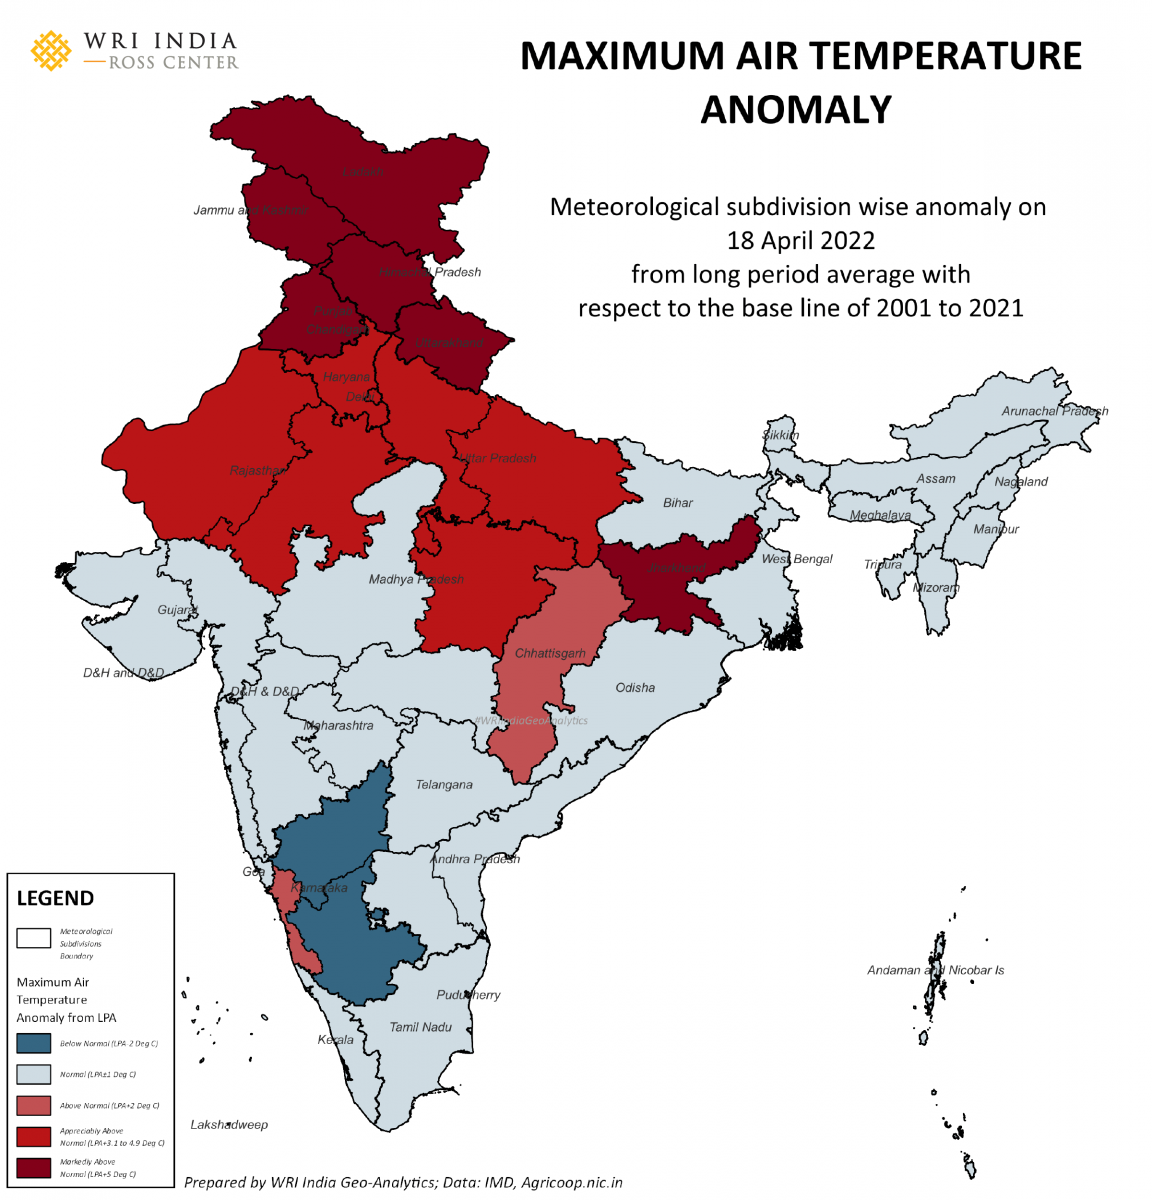 Maps show anomalies of maximum air temperature and surface temperature.